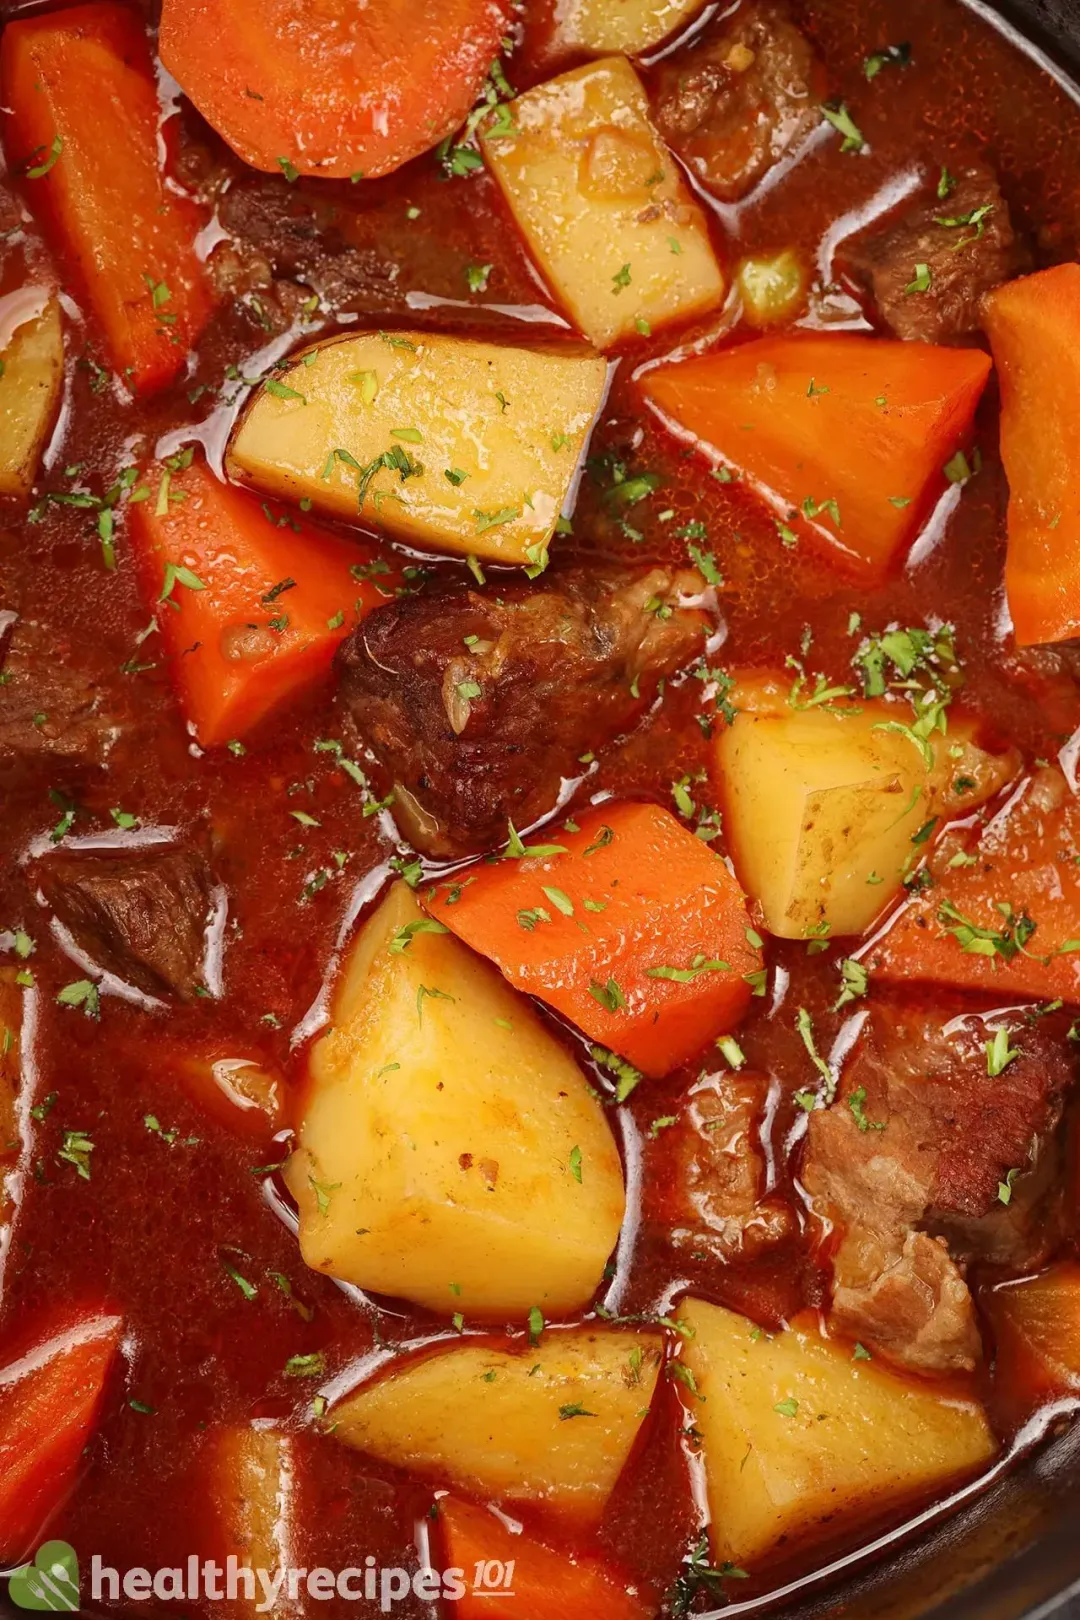 Beef Stew Recipe